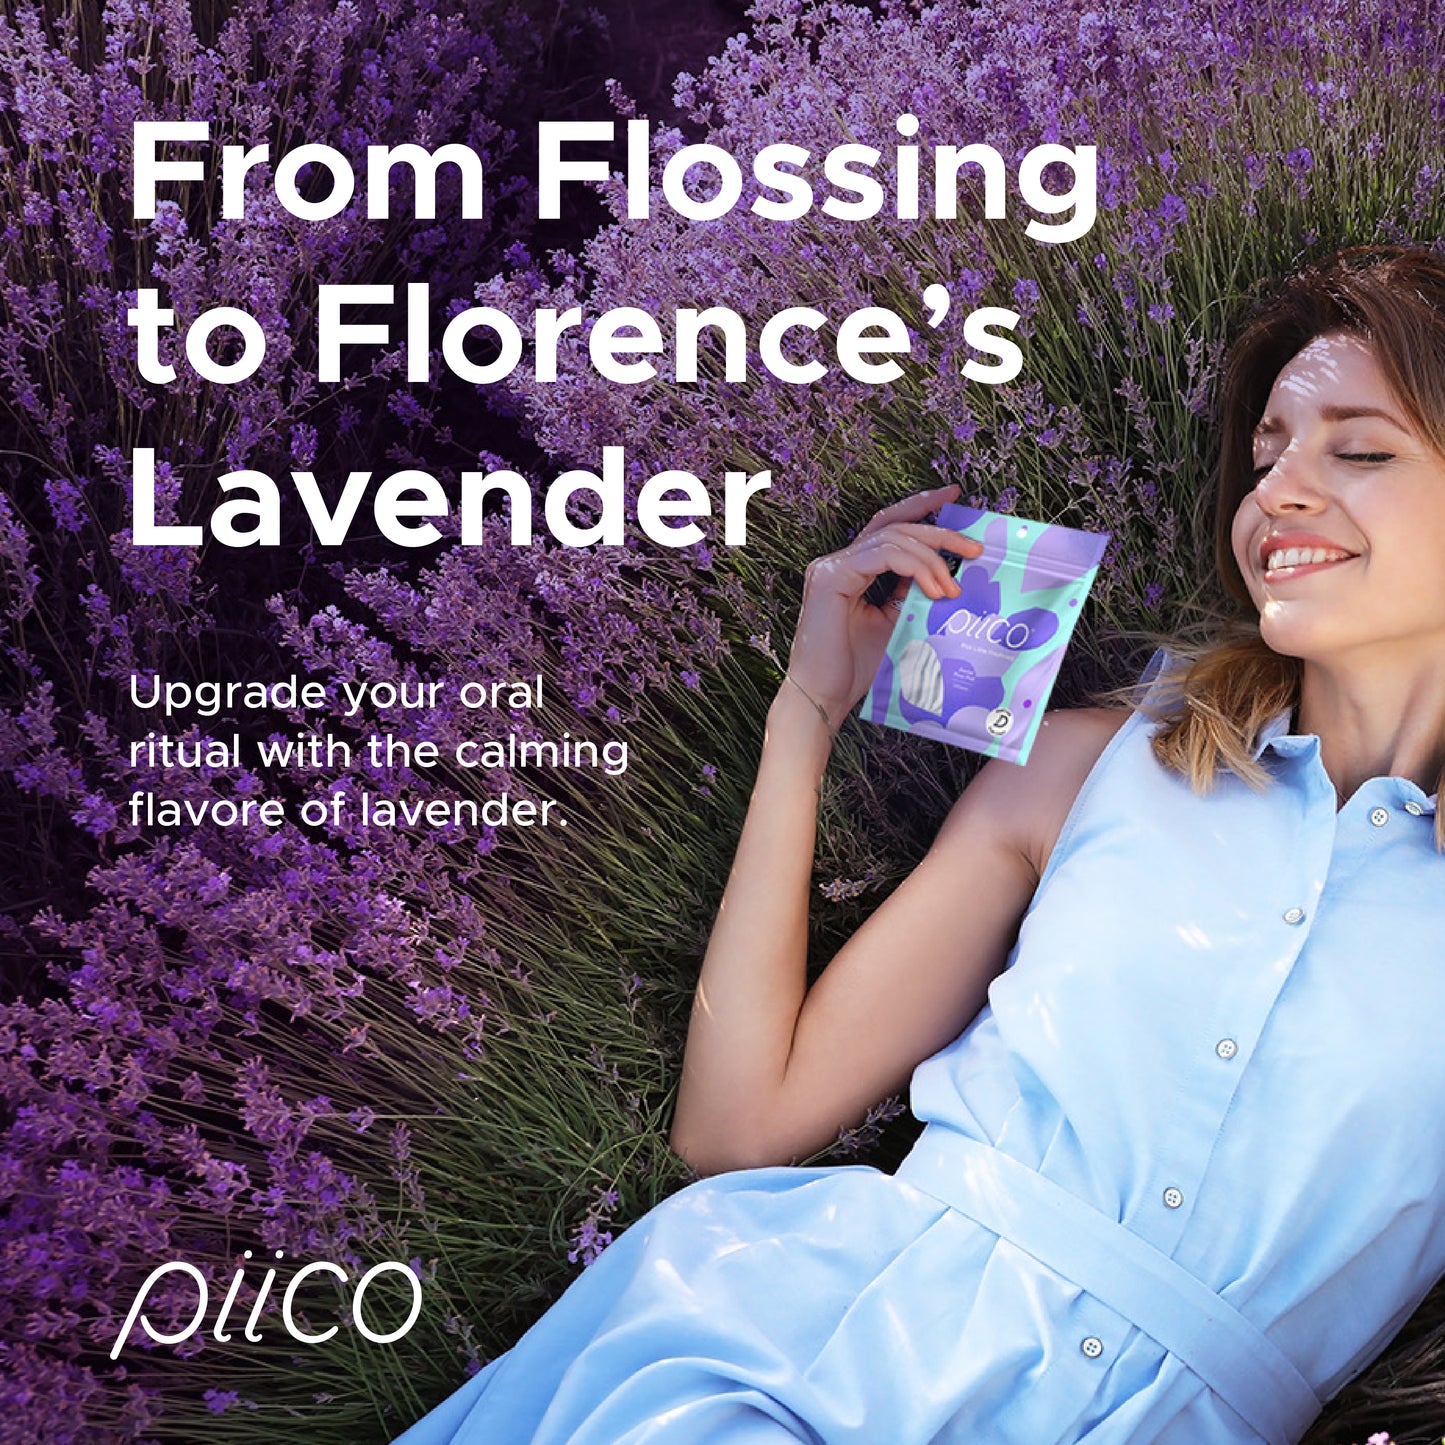 Piico Lavender Flavored Dental Floss Picks (100 Count)